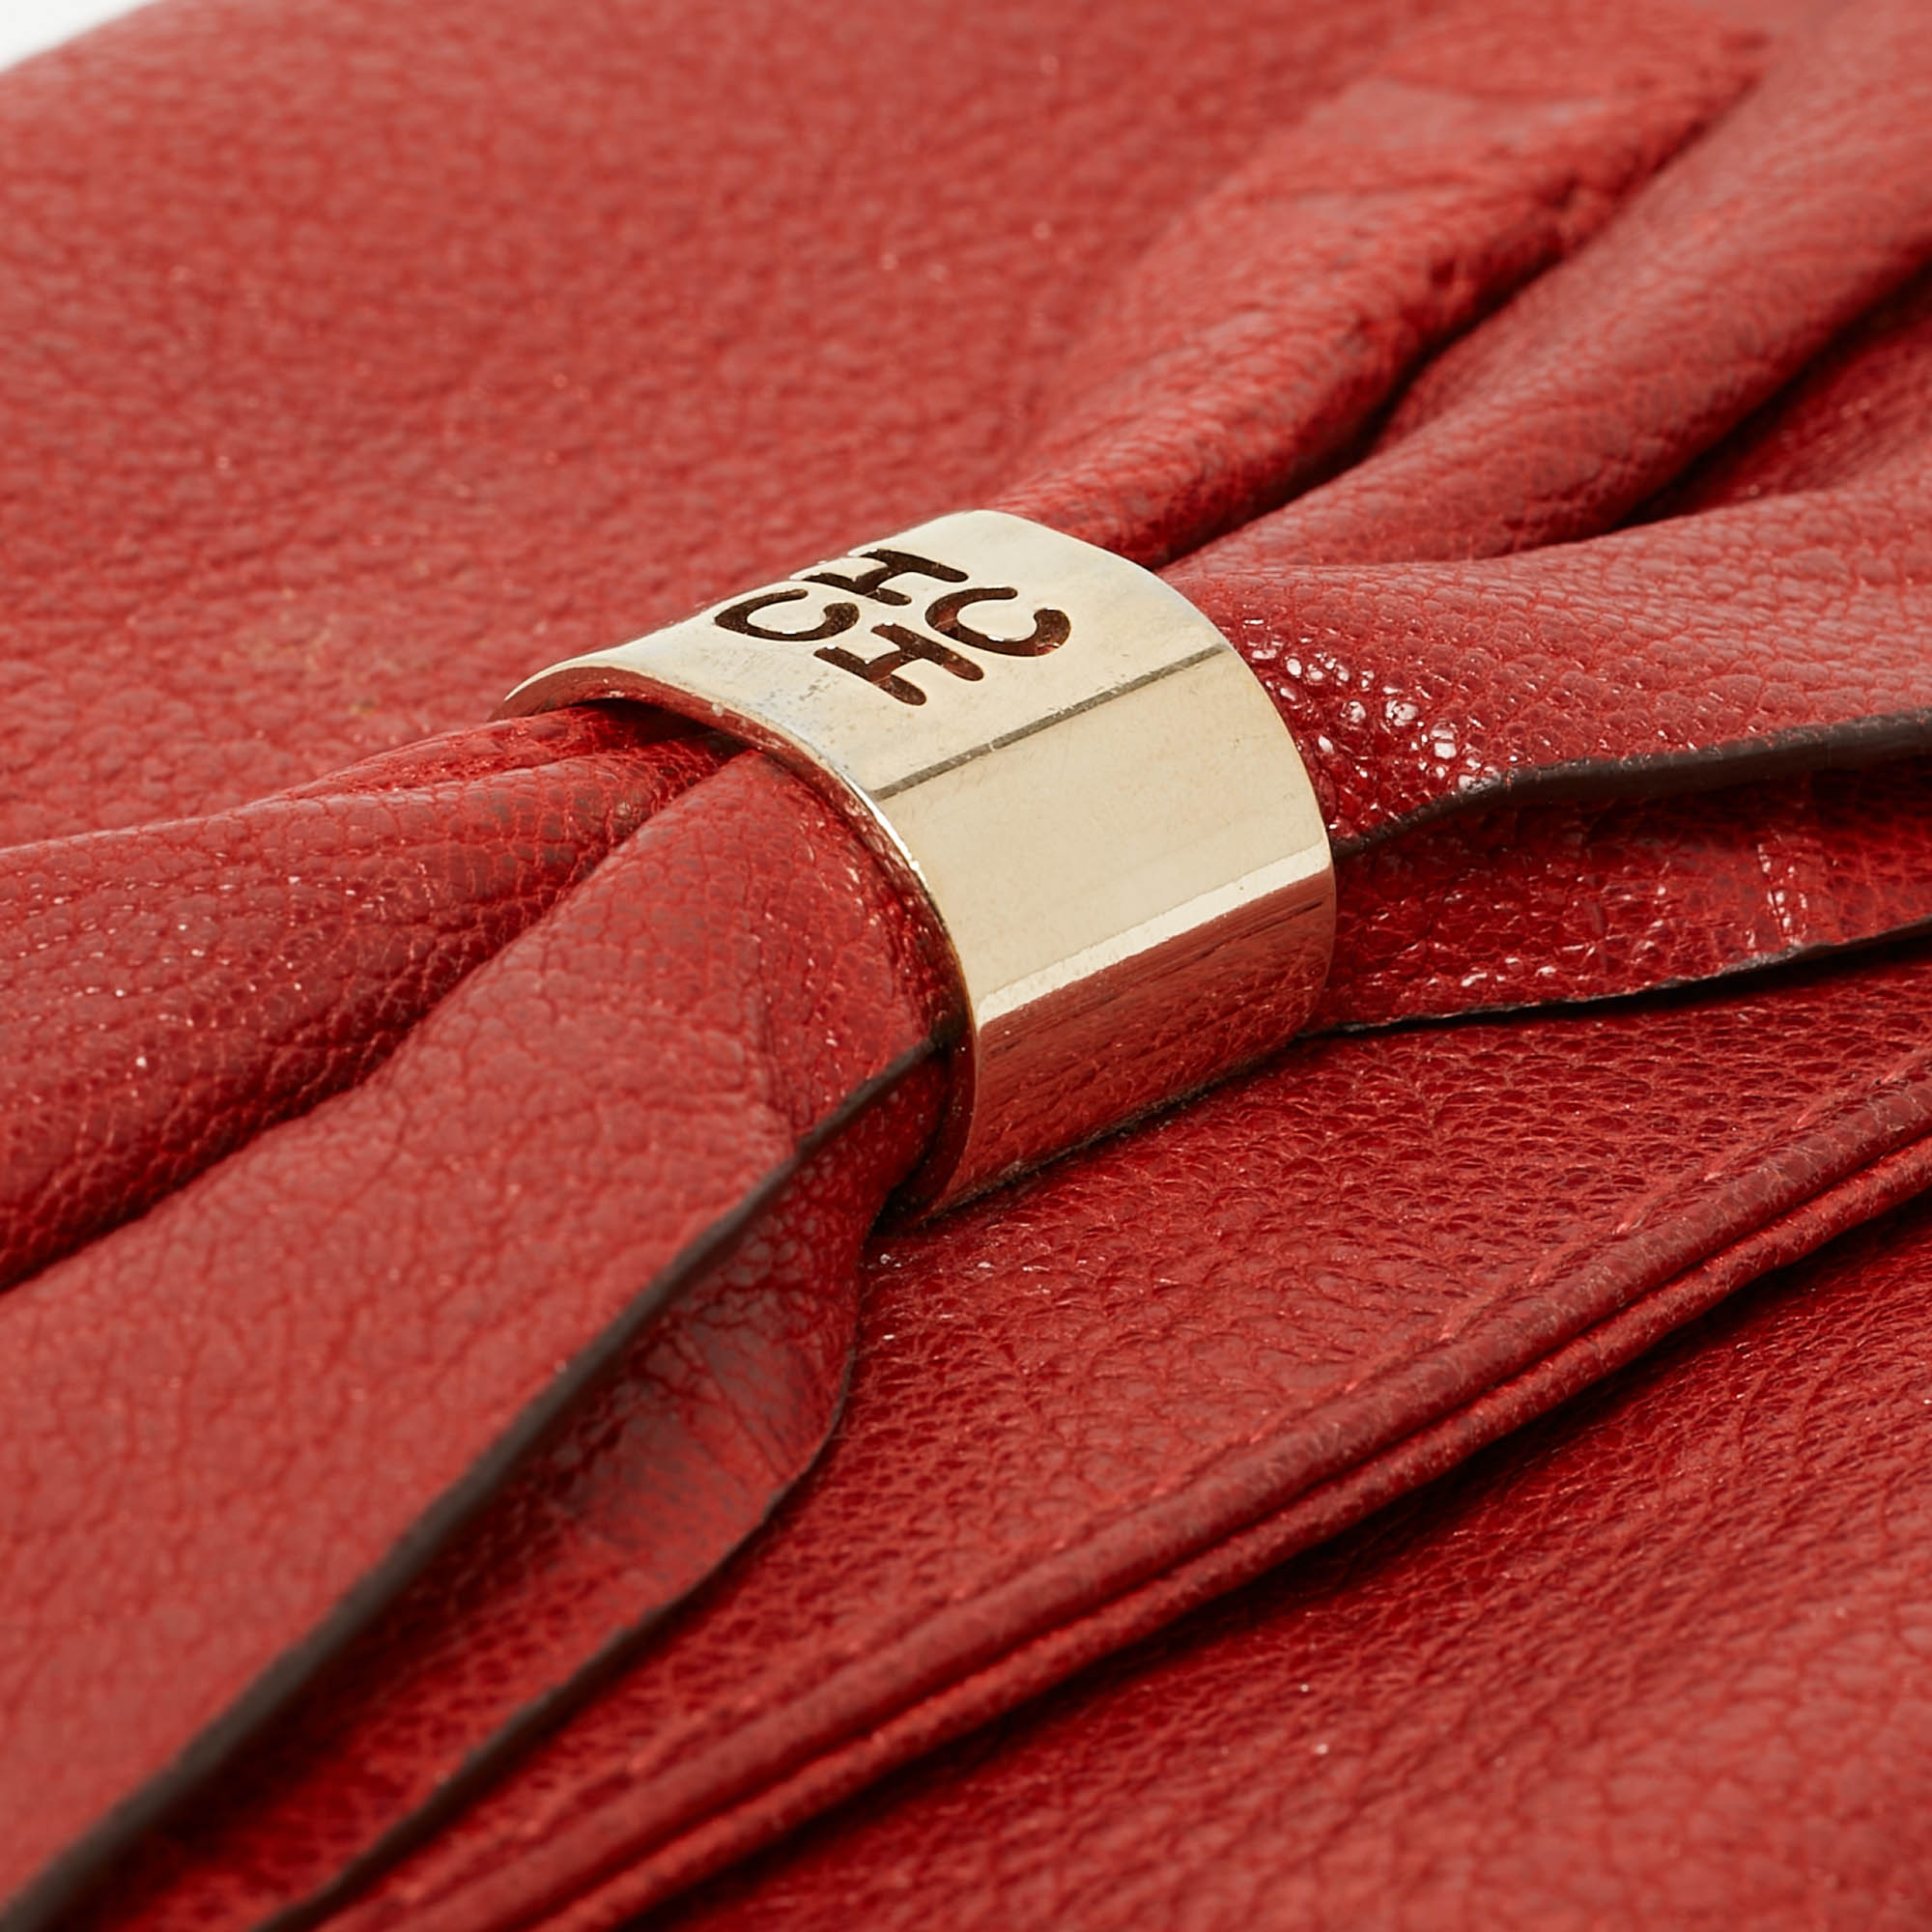 CH Carolina Herrera Red Monogram Leather Bow Chain Clutch